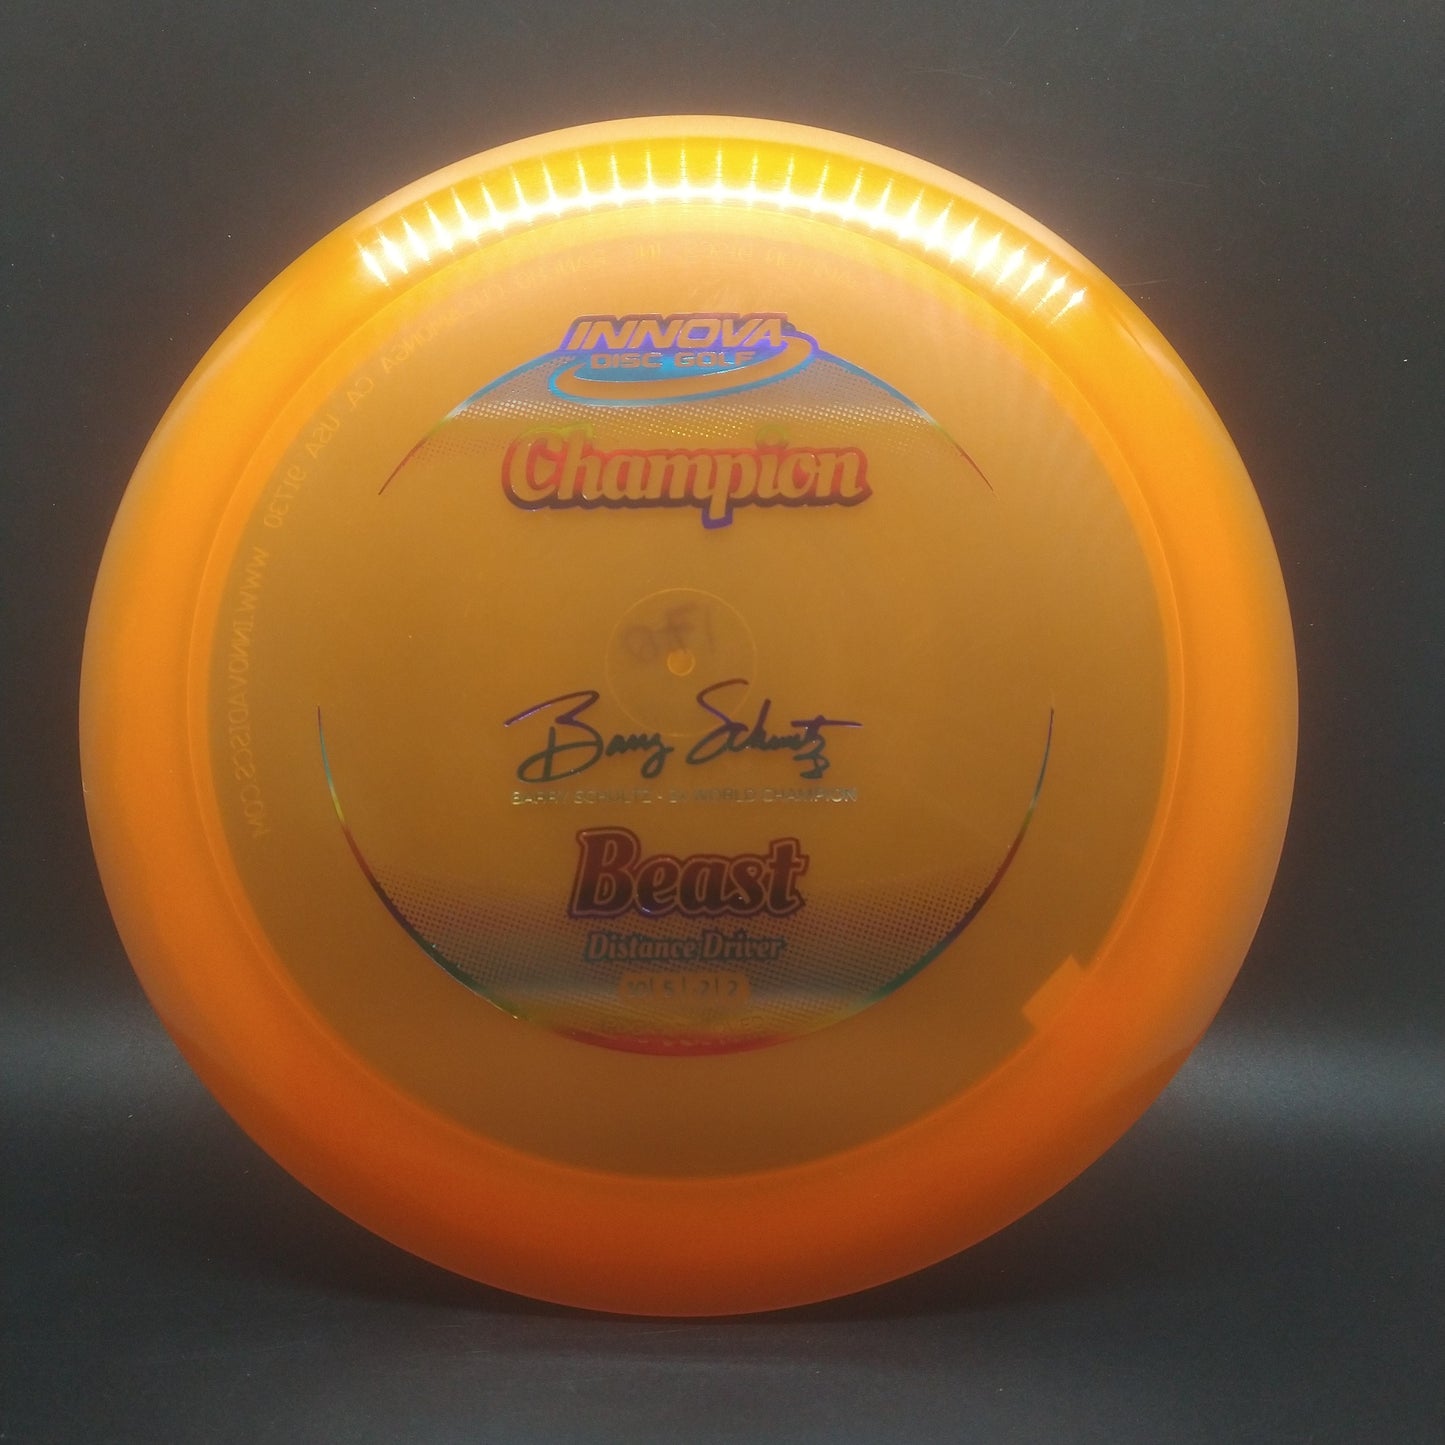 Innova champion Beast Orange 170g